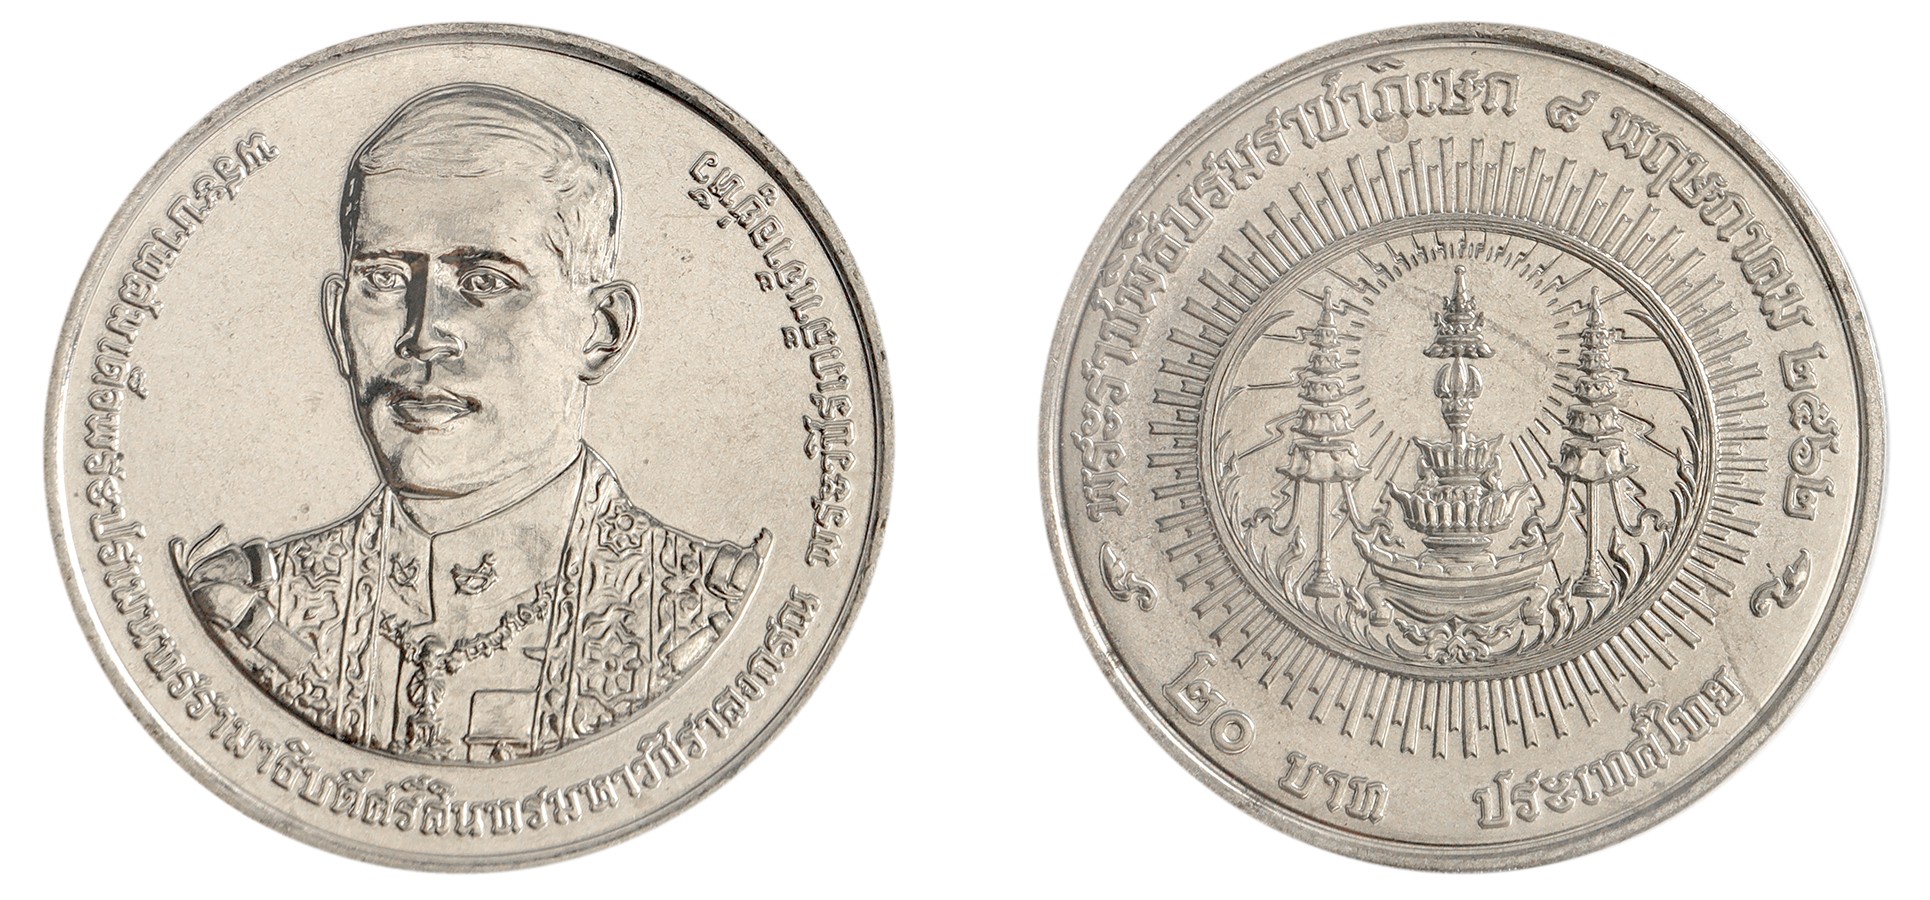 Thailand 20 Baht Coin, 2019, N #166239, Mint, Commemorative